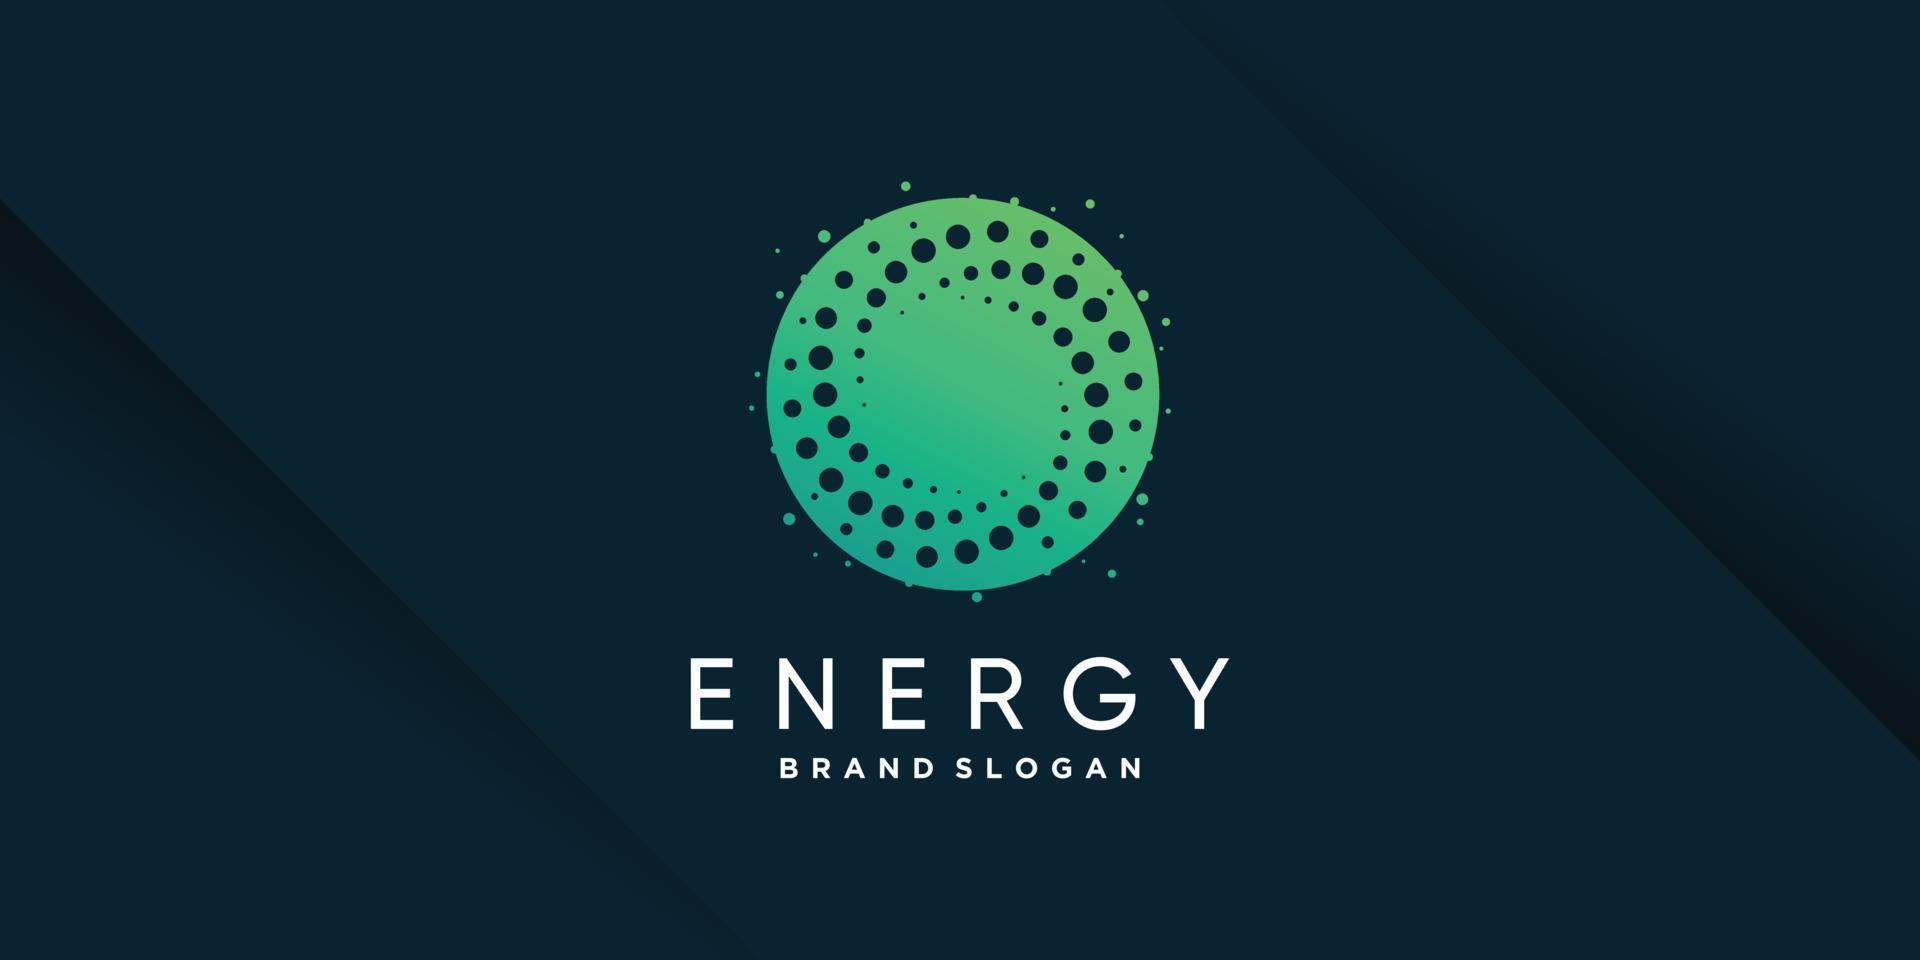 Energy logo with creative and unique style Premium Vector